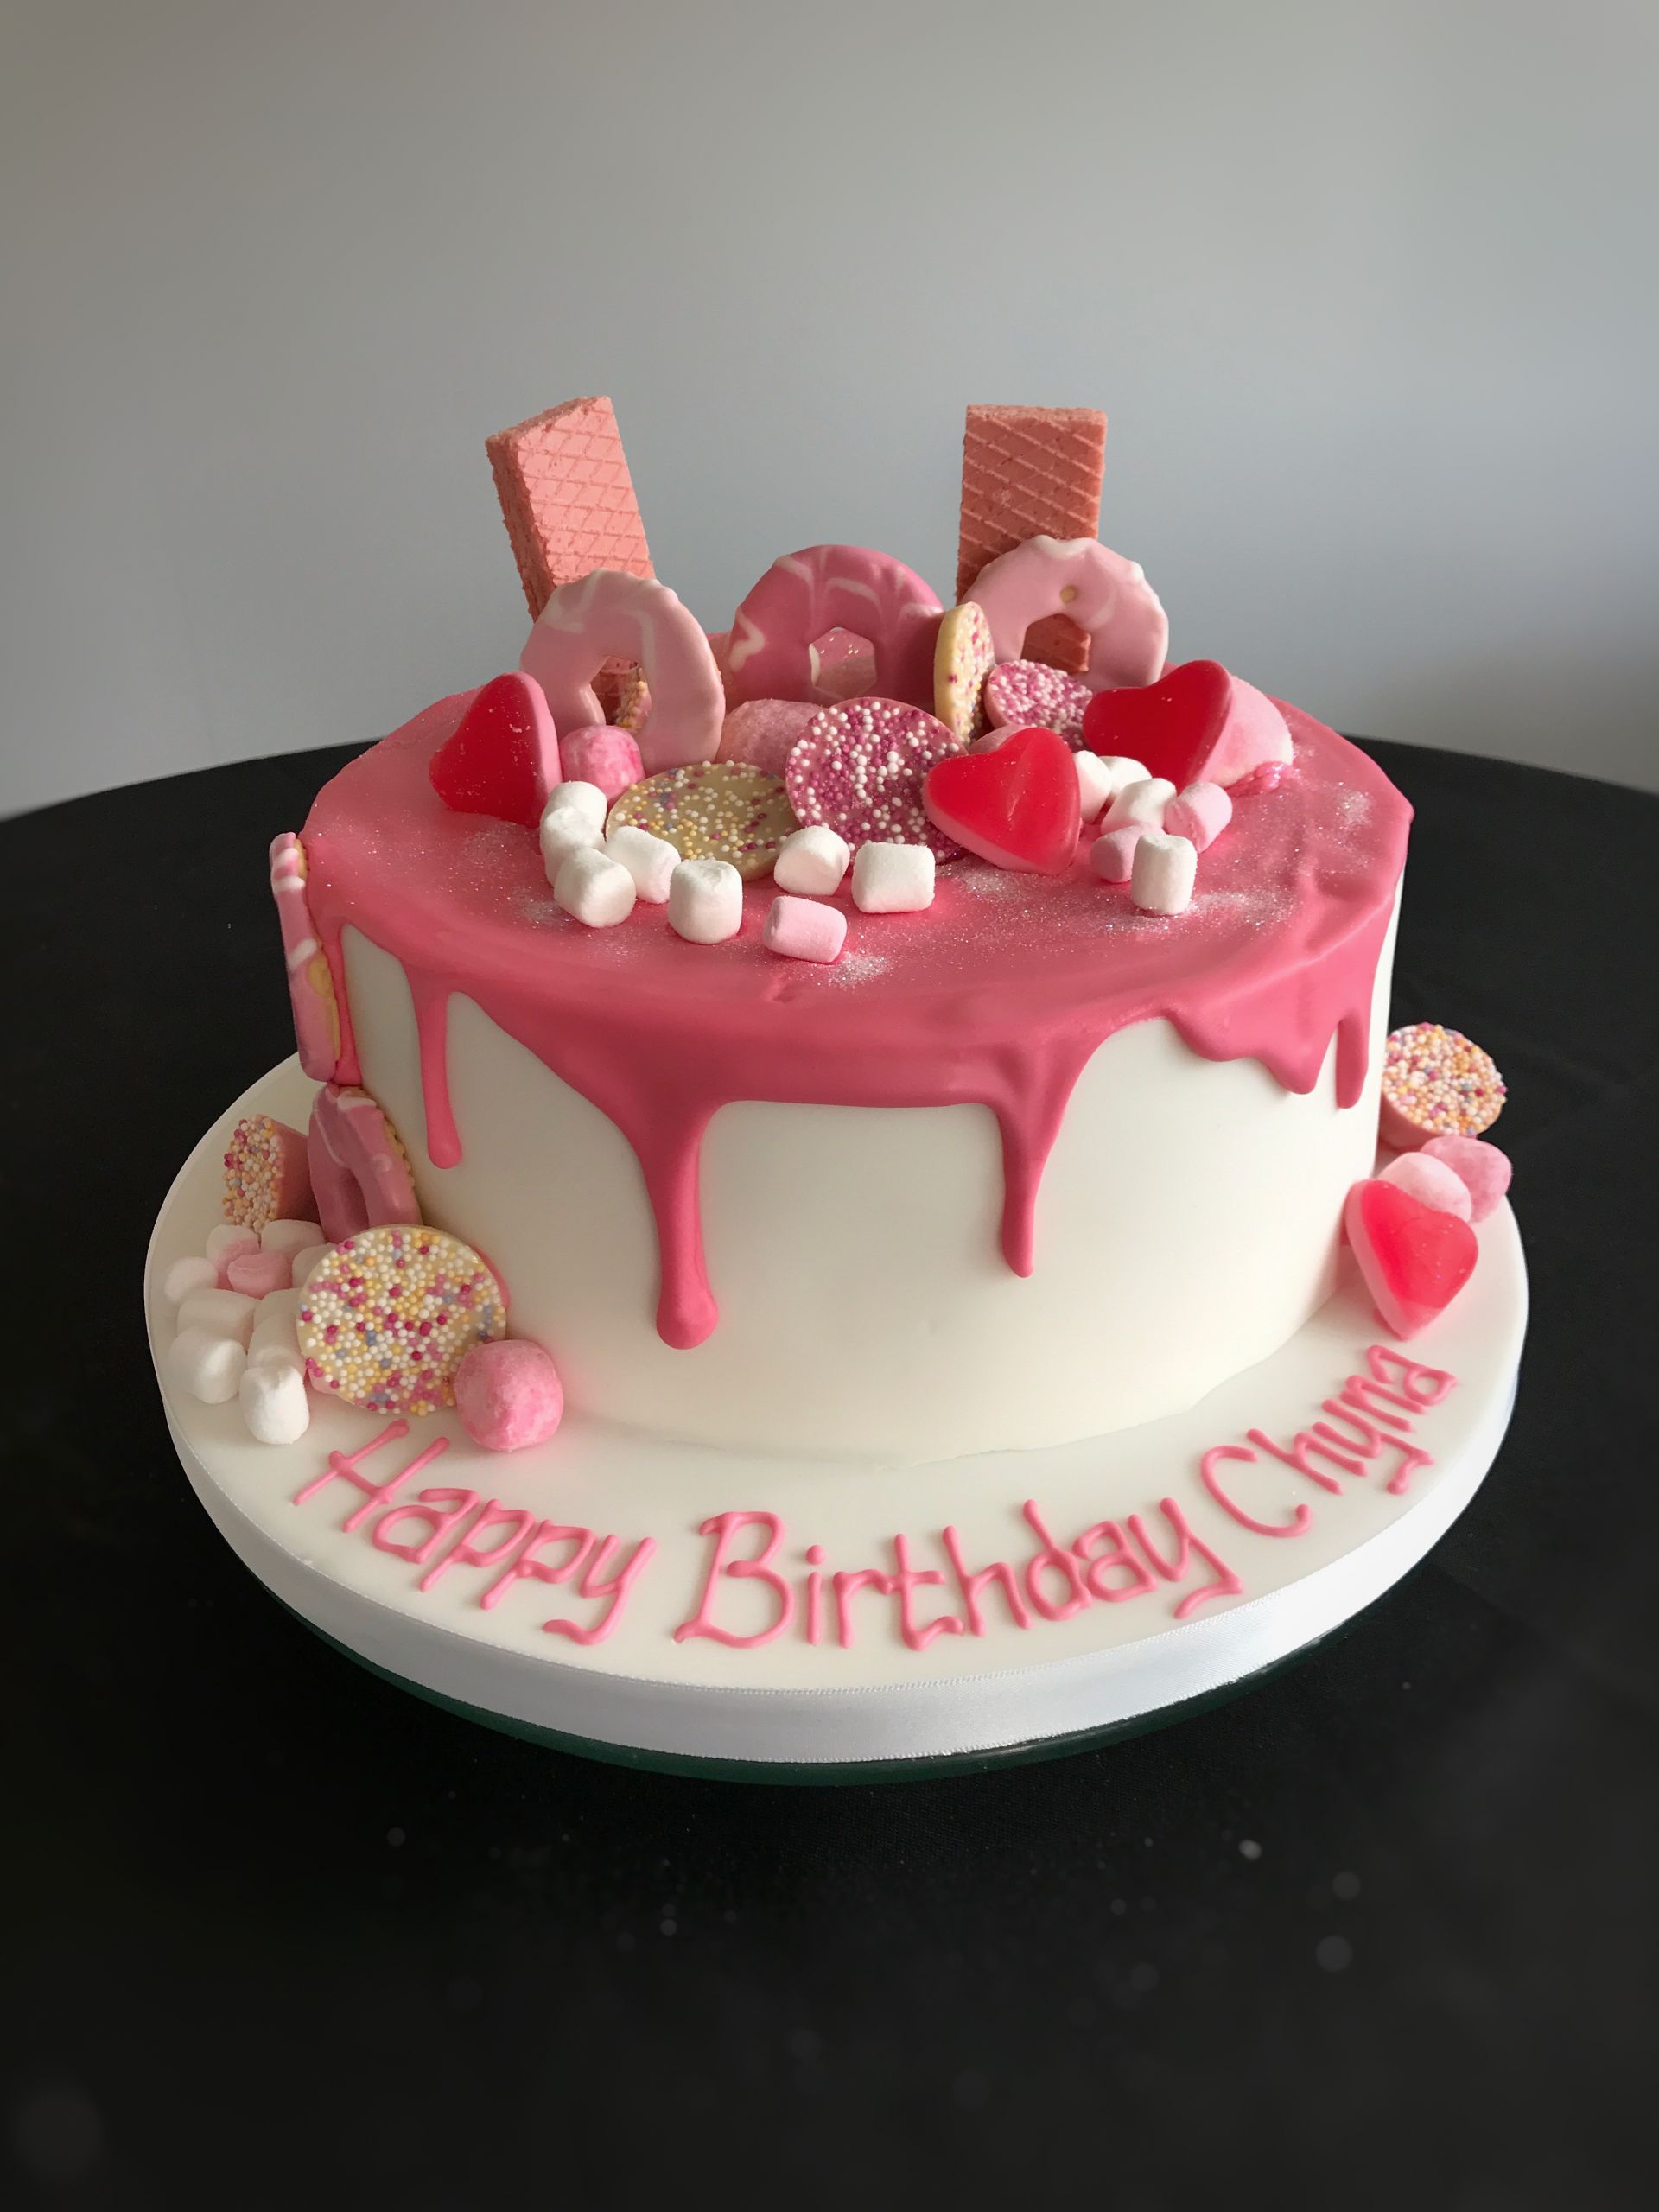 Pics Of Birthday Cakes
 Female Birthday Cakes Bedfordshire Hertfordshire London